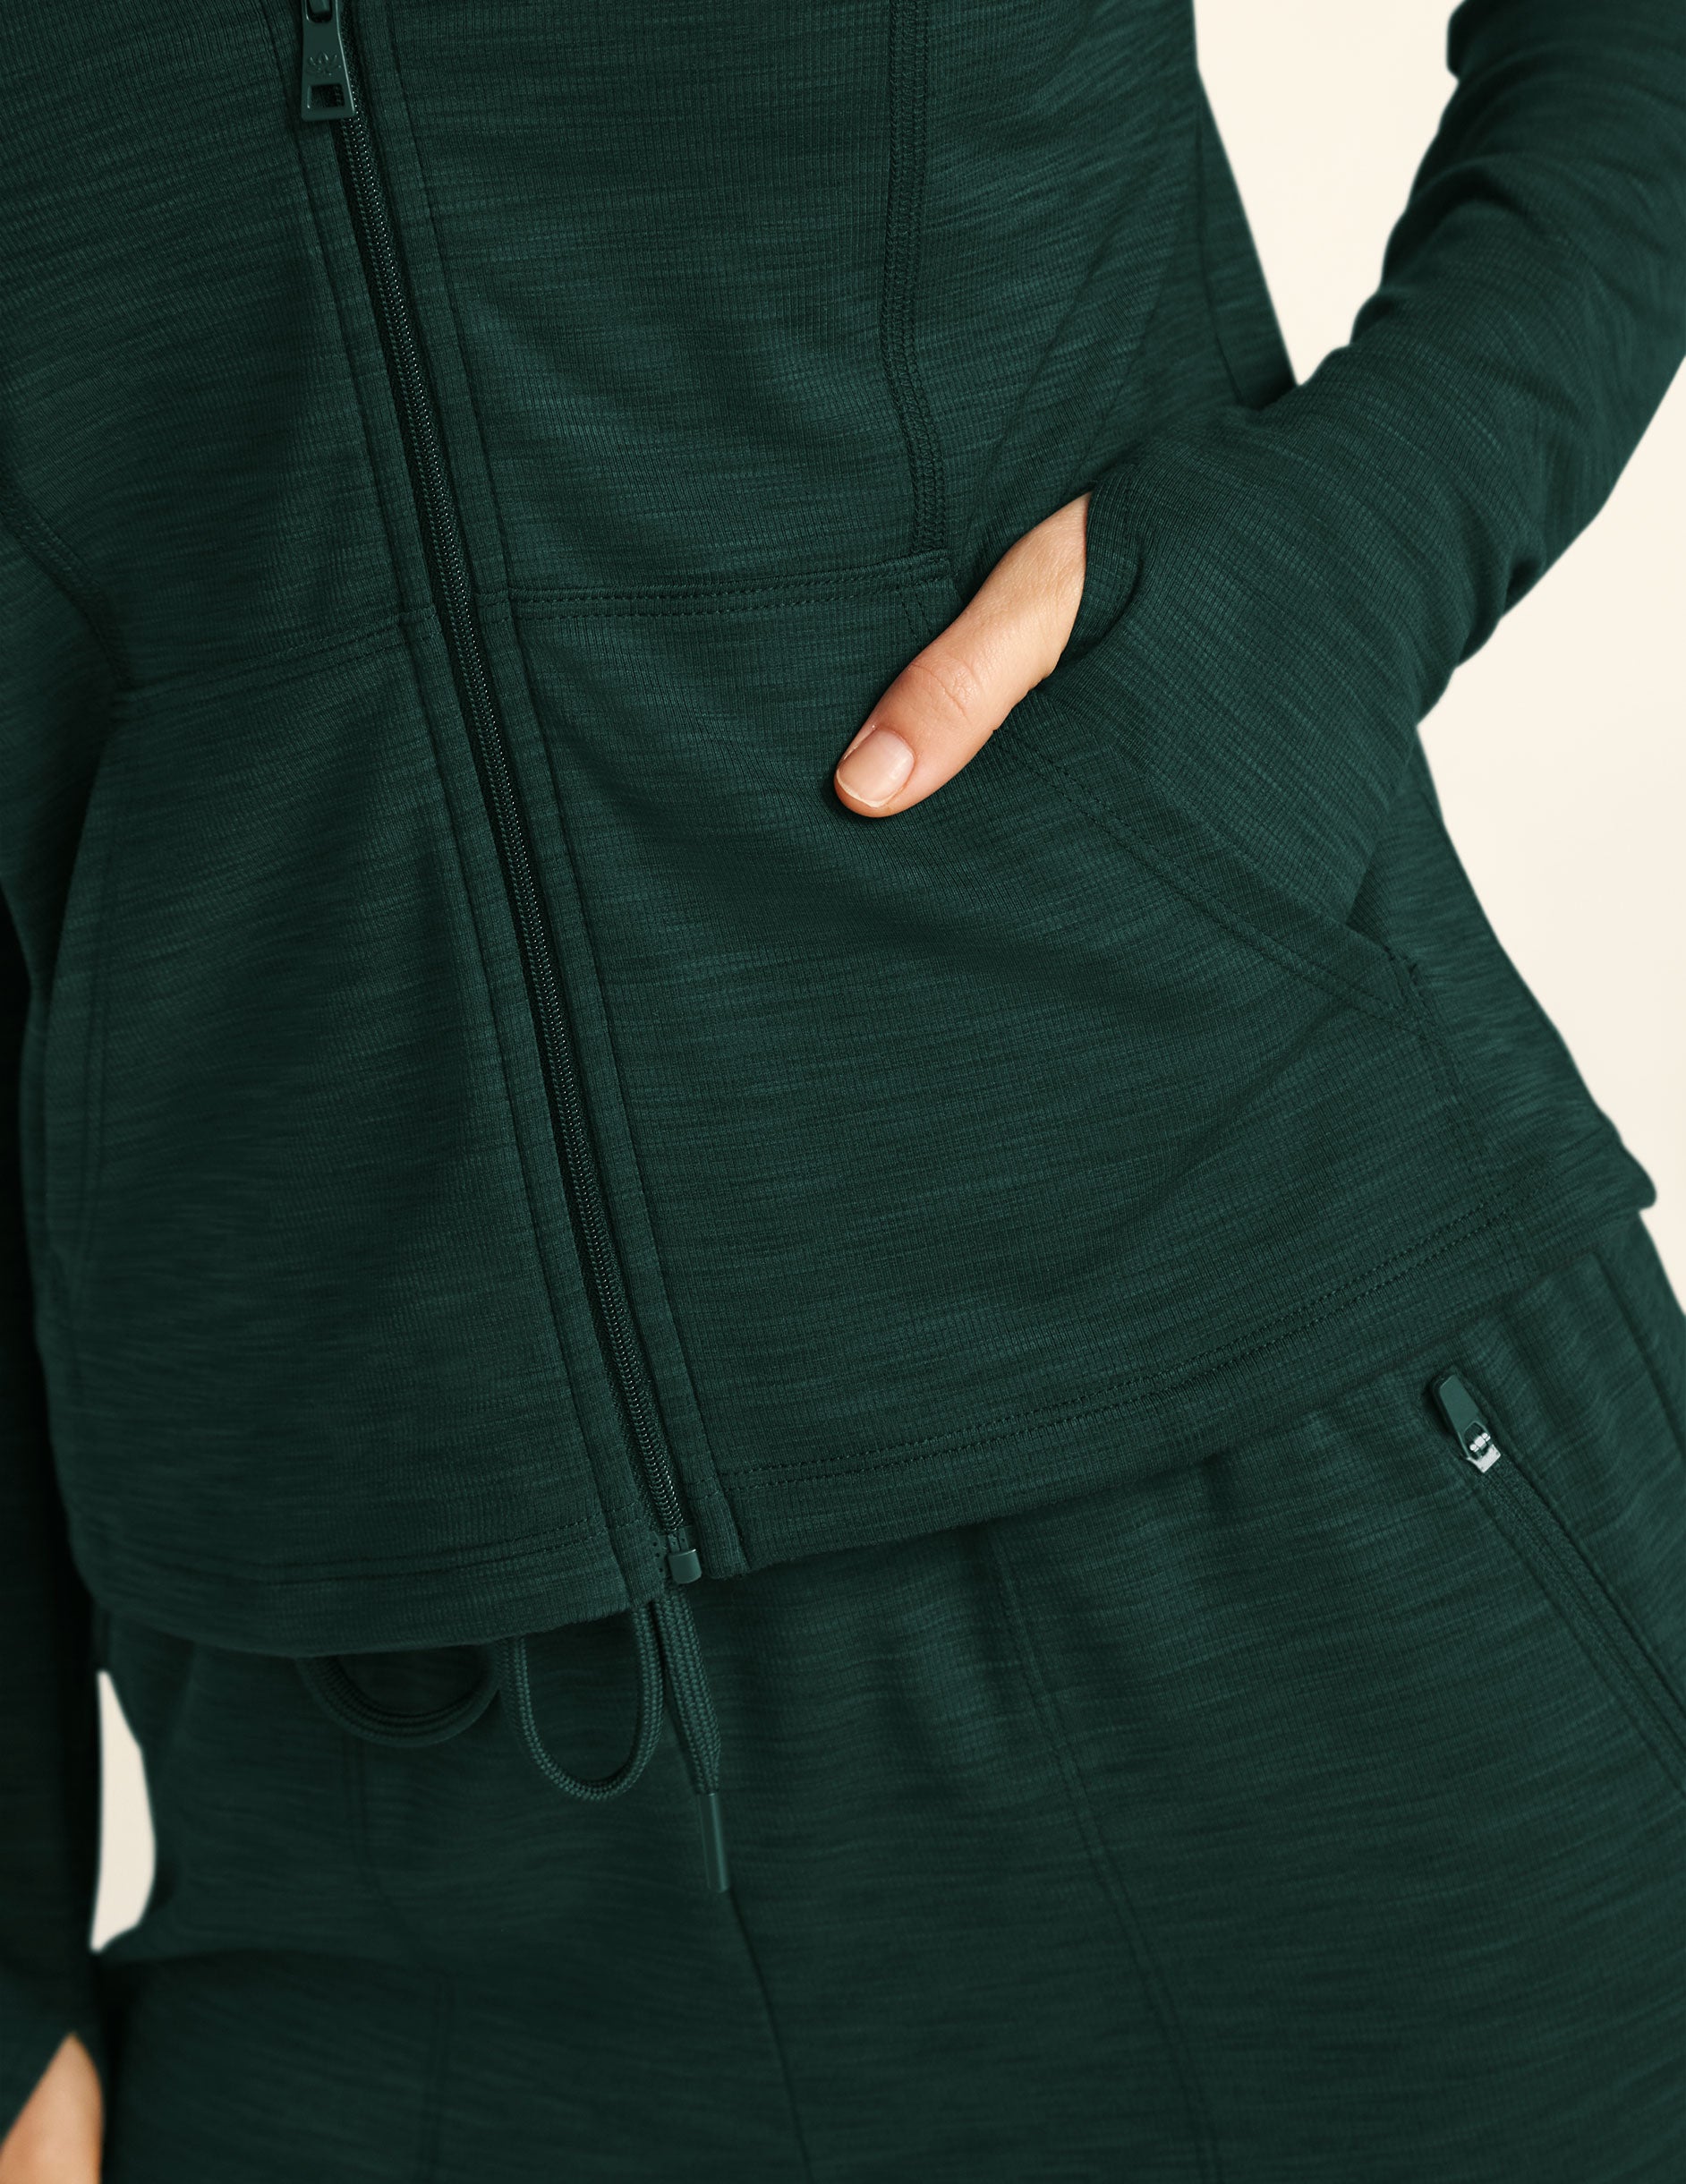 green zip-up hooded jacket. 